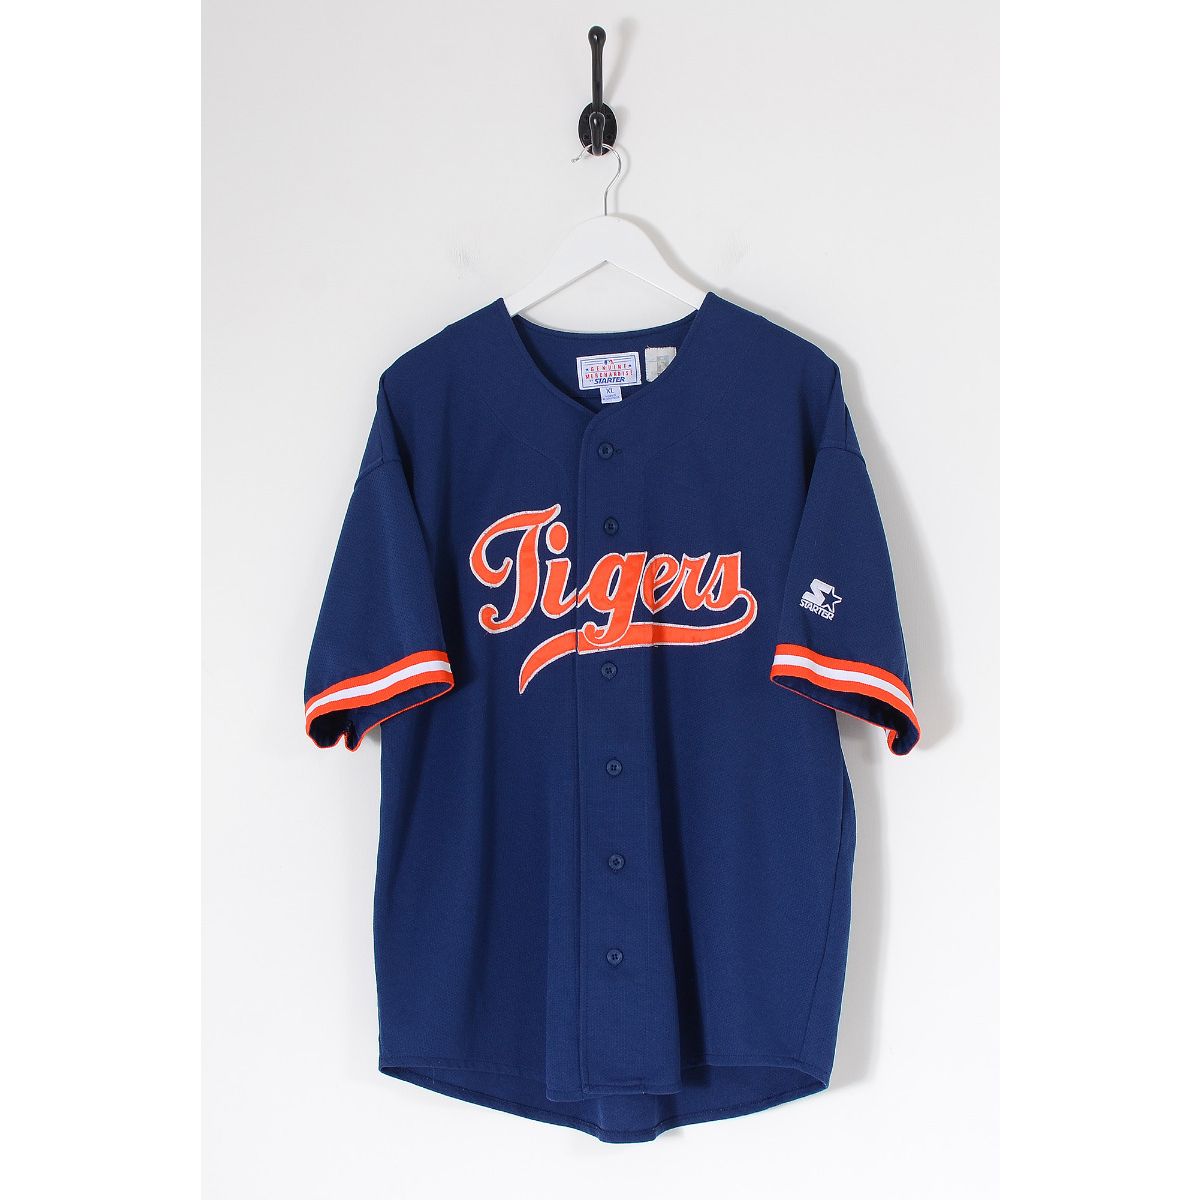 Vintage Detroit Tigers MLB Baseball Jersey Navy Blue XL, Vintage Online